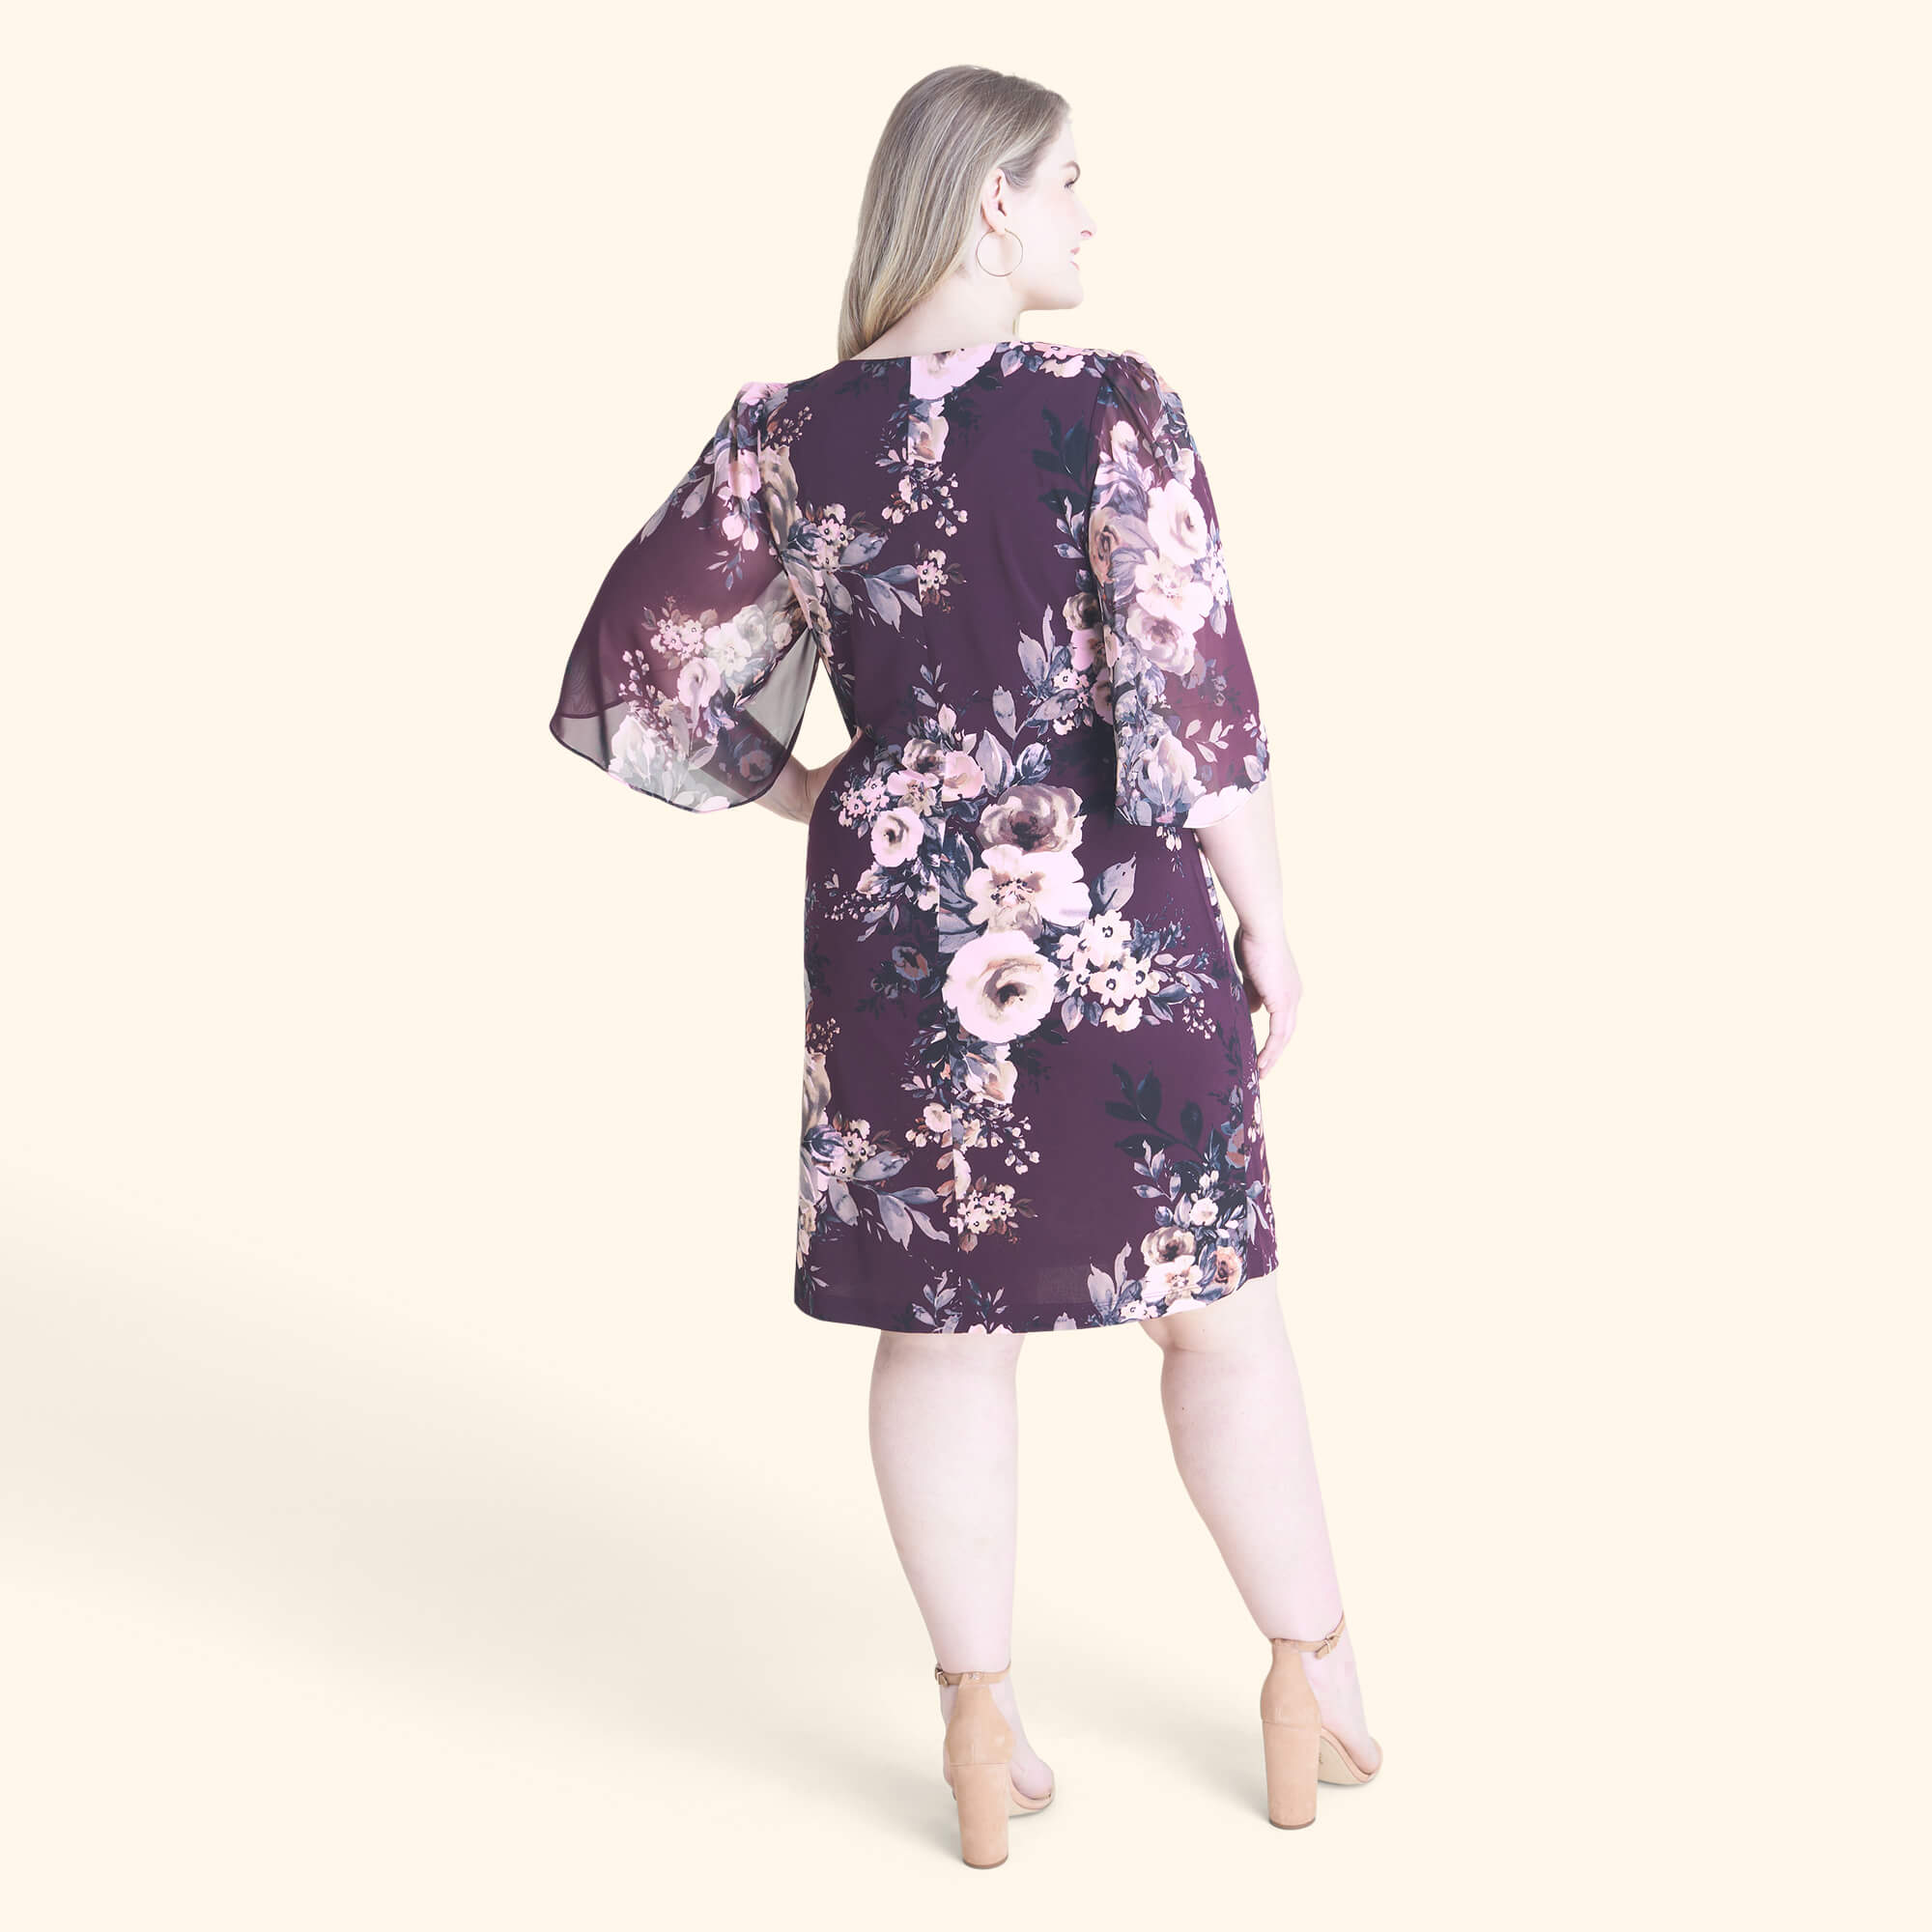 Stevie Dark Plum Floral Sheath Dress | Connected Apparel